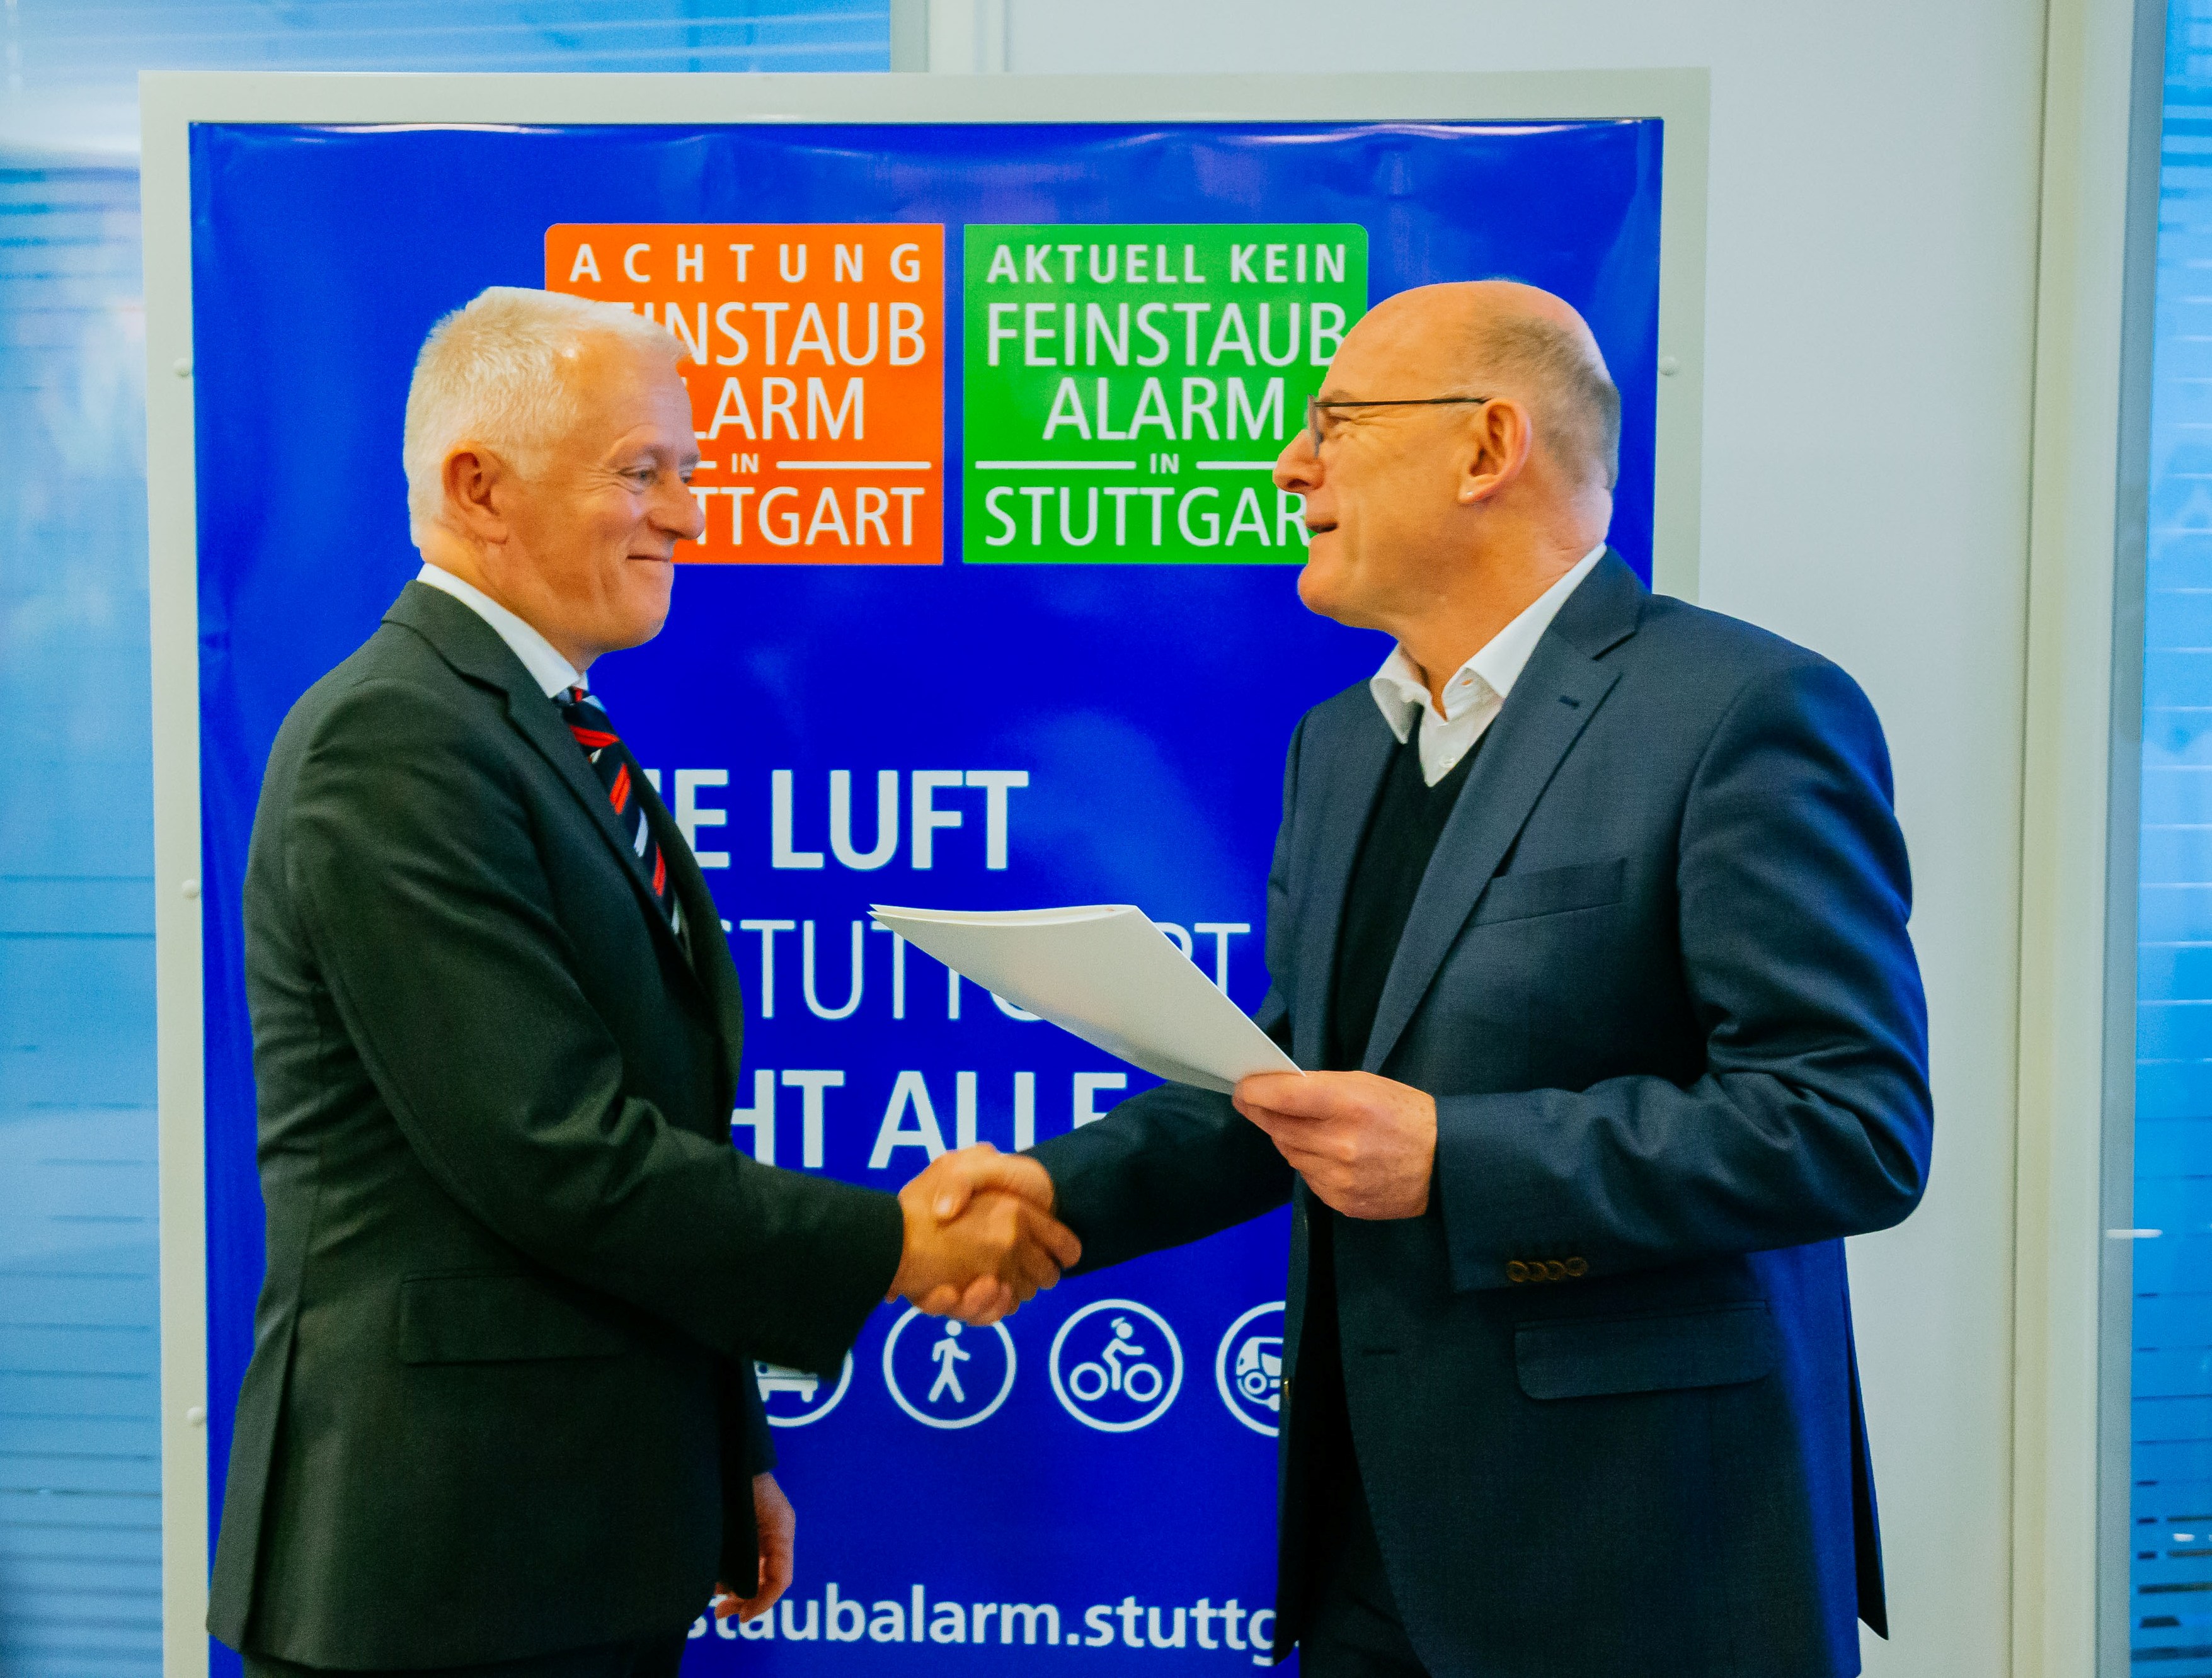 Land fördert Informationstafeln zum Feinstaubalarm in Stuttgart mit 1,5 Millionen Euro